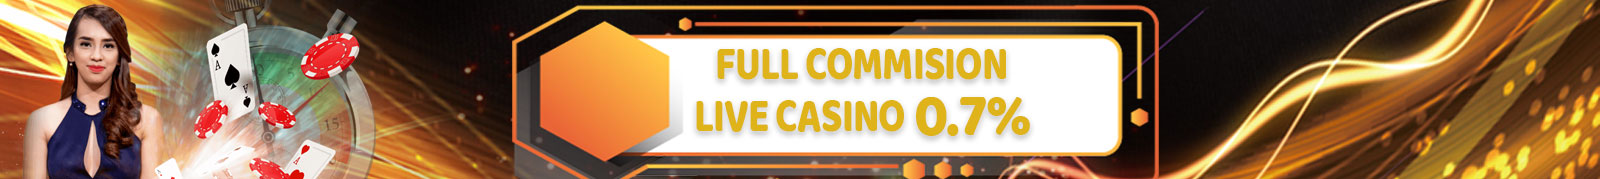 Rollingan-Live-Casino